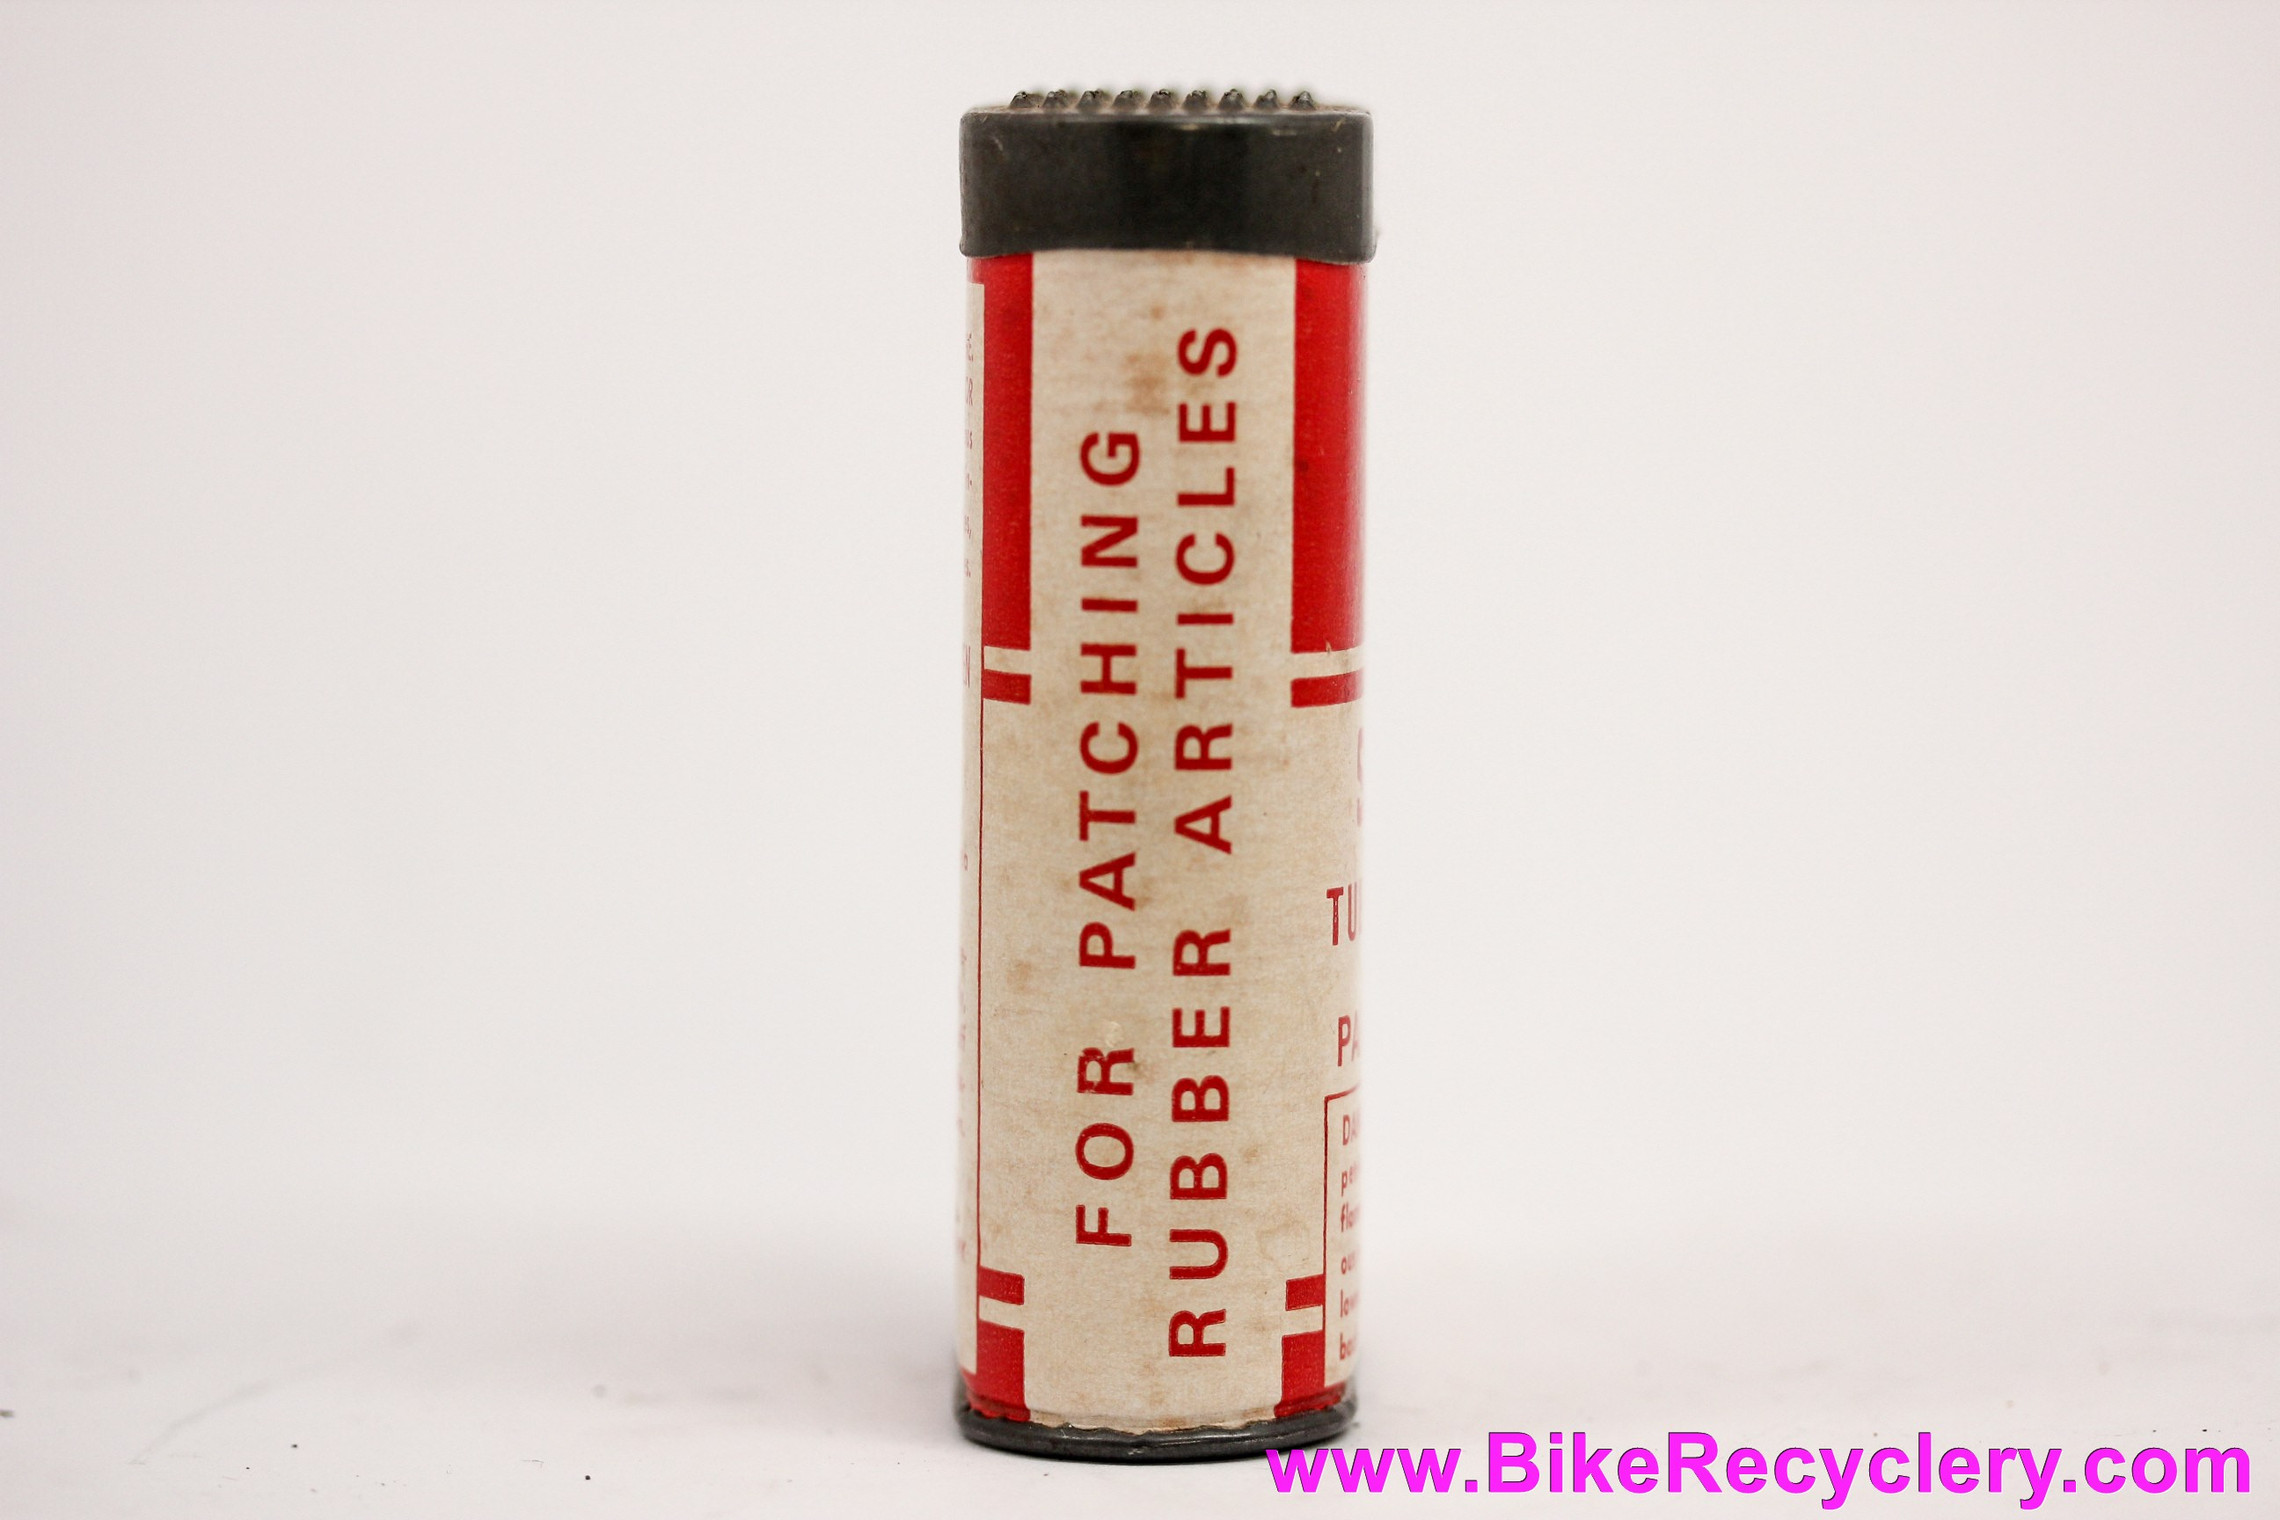 Schwinn Tube Repair Kit in Red Can w/ Patches: Vintage 1960's Bicycle Memorabilia Display Item